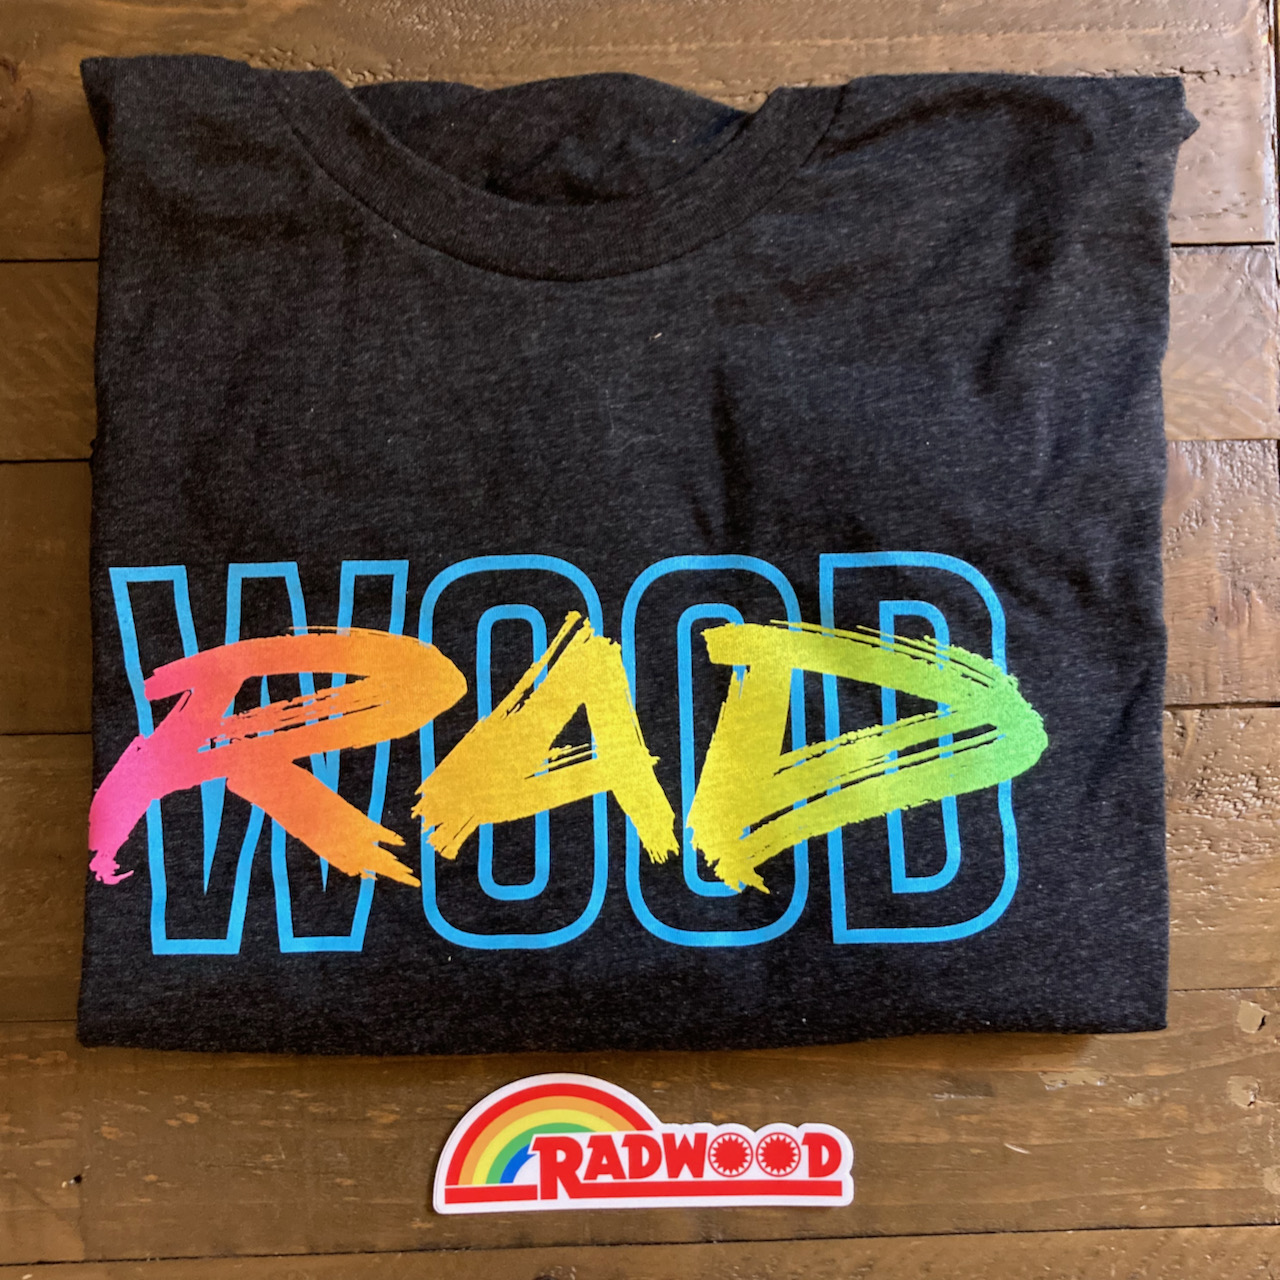 RADWOOD T-Shirt and Redwood rainbow sticker on wooden table..